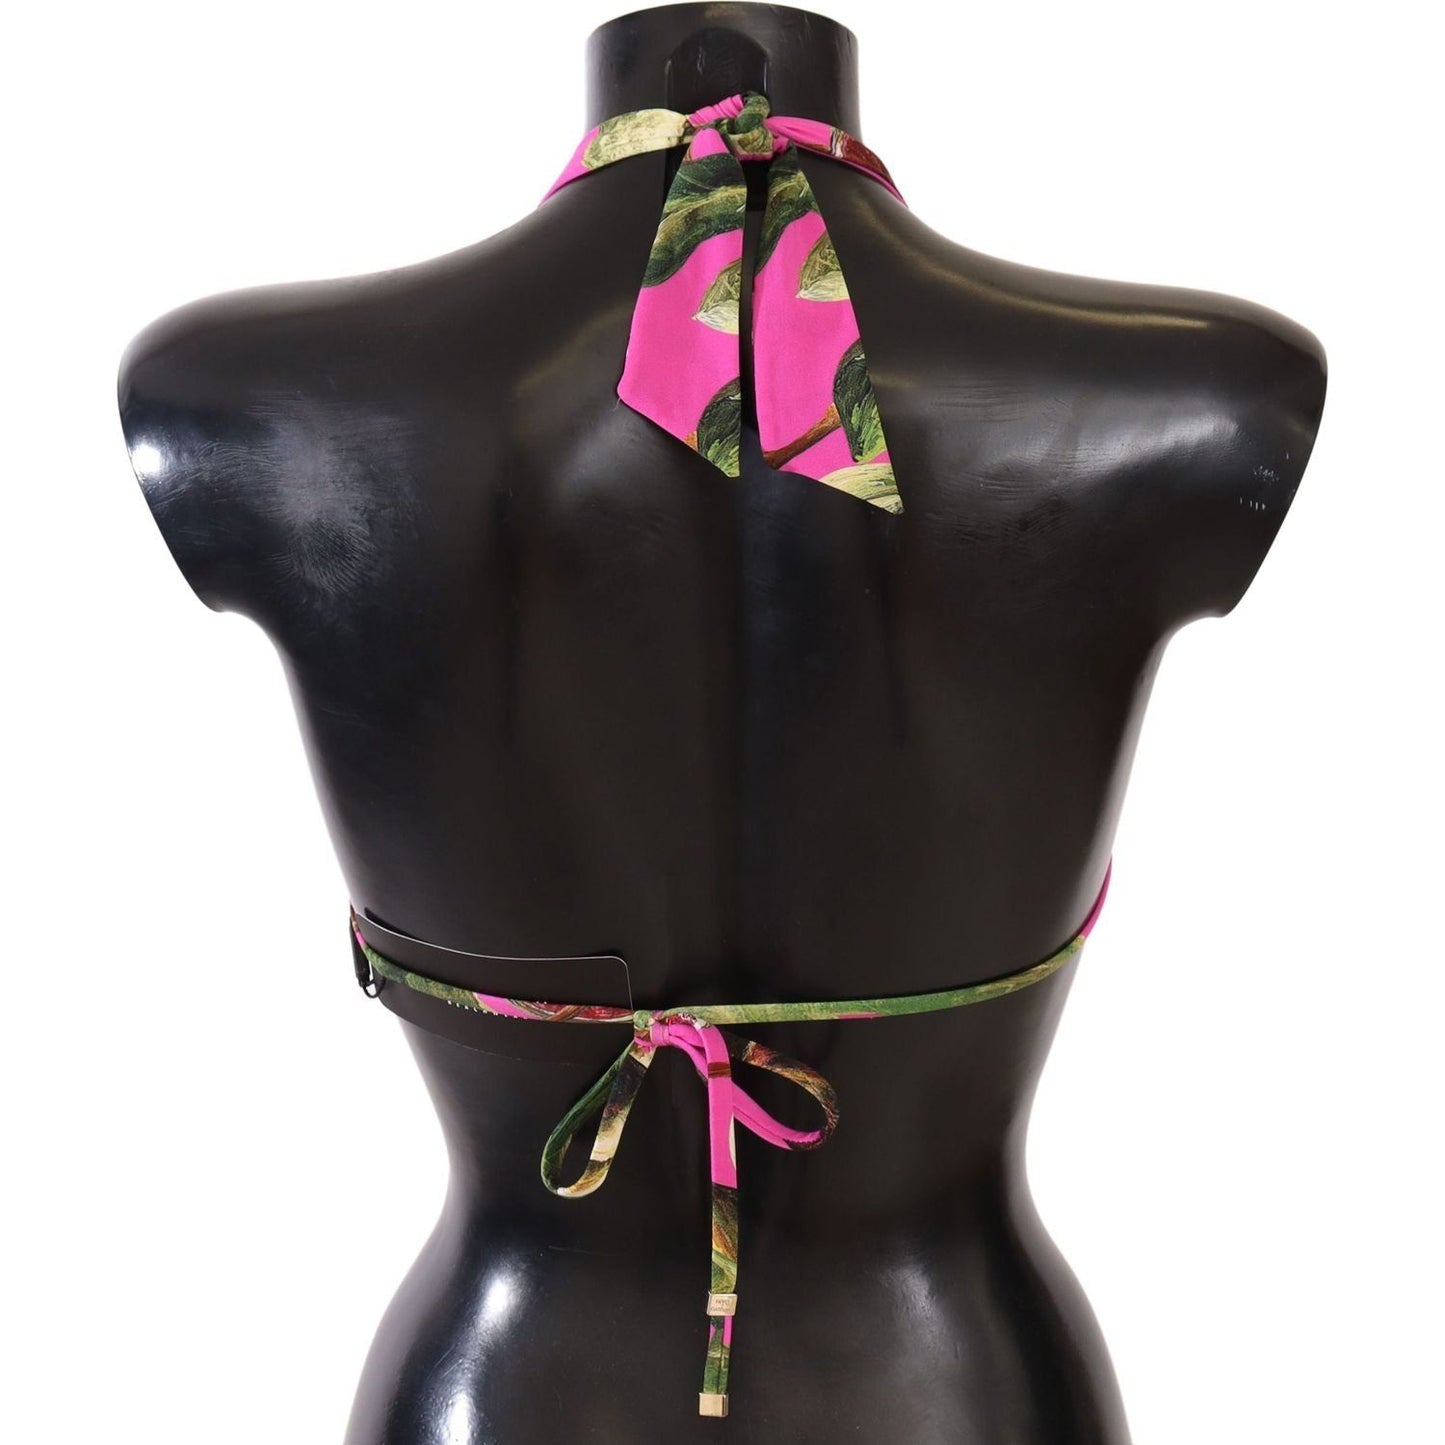 Dolce & Gabbana Chic Floral Bikini Top pink-printed-nylon-swimsuit-bikini-top-swimwear IMG_8266-scaled-6a889ba5-146.jpg